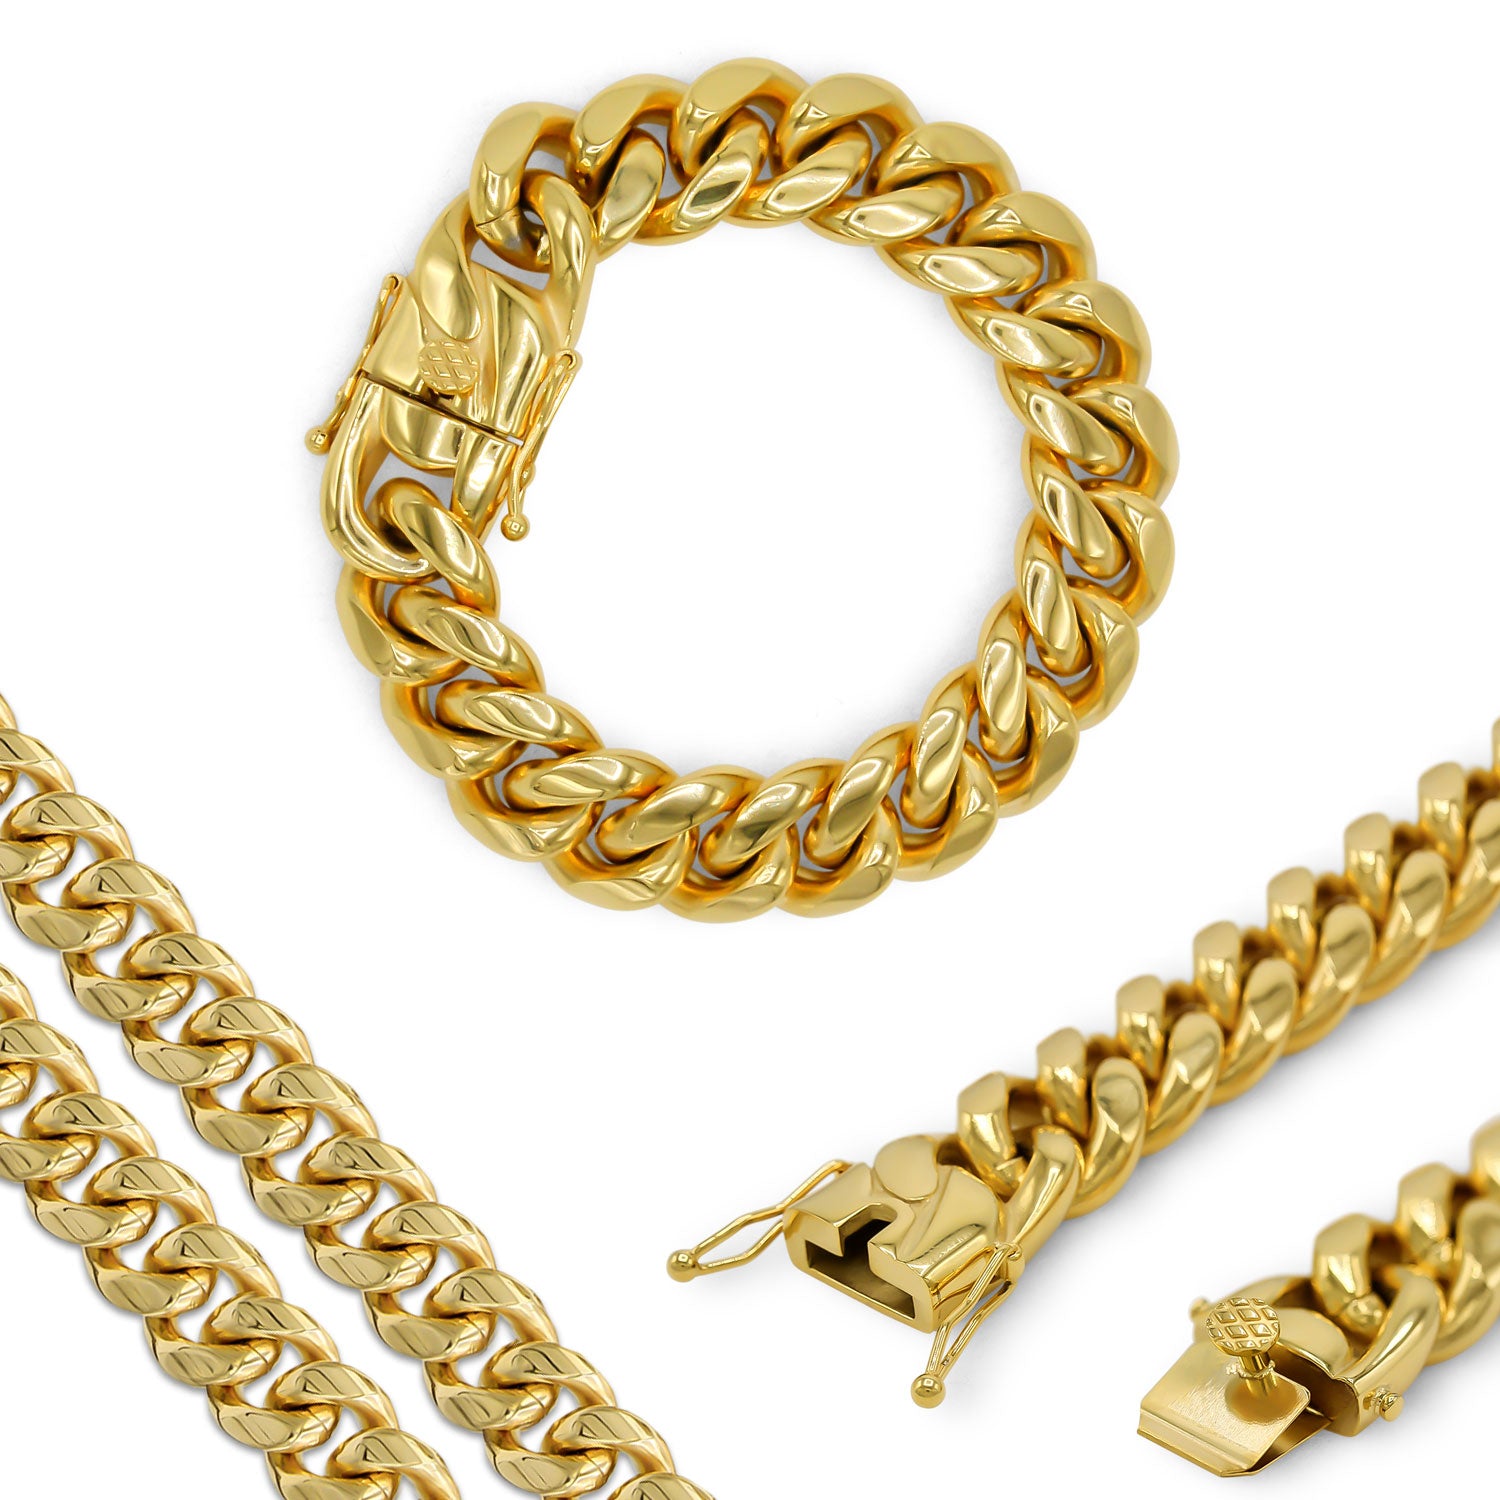 Twistedpendant Men's 18K Gold Cuban Link Bracelet